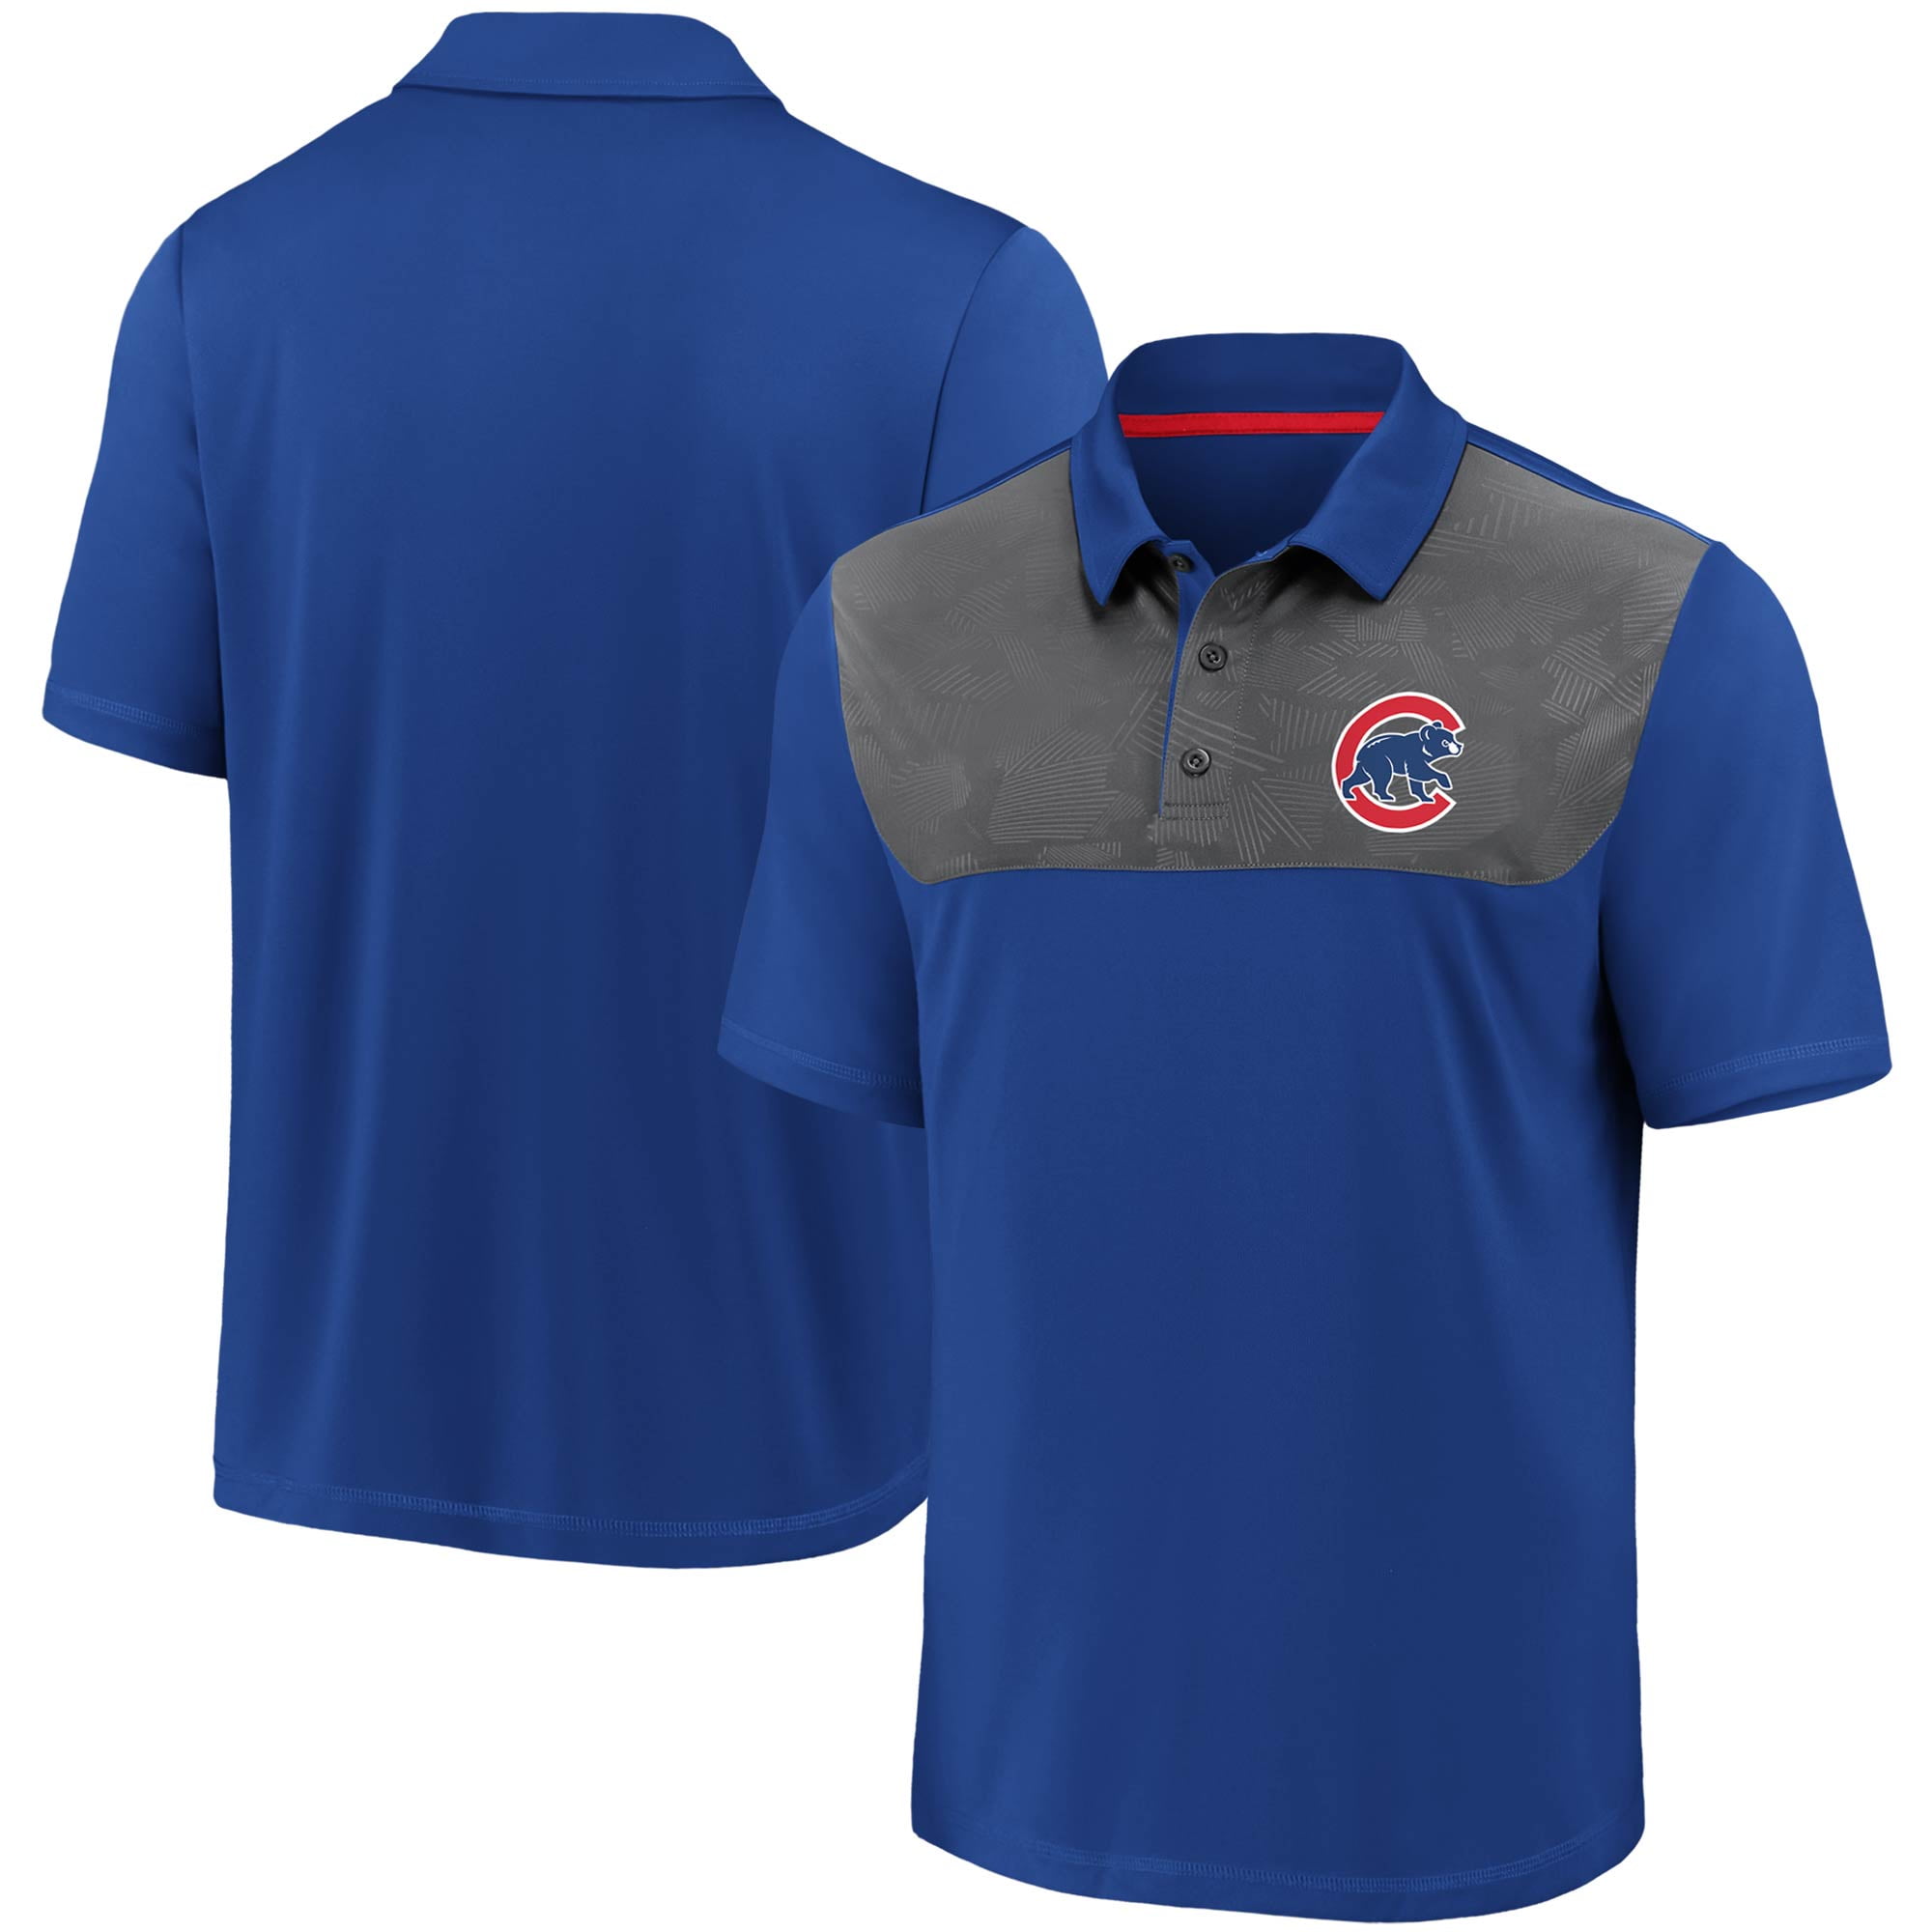 Men's Fanatics Branded Royal Chicago Cubs Defender Polo - Walmart.com